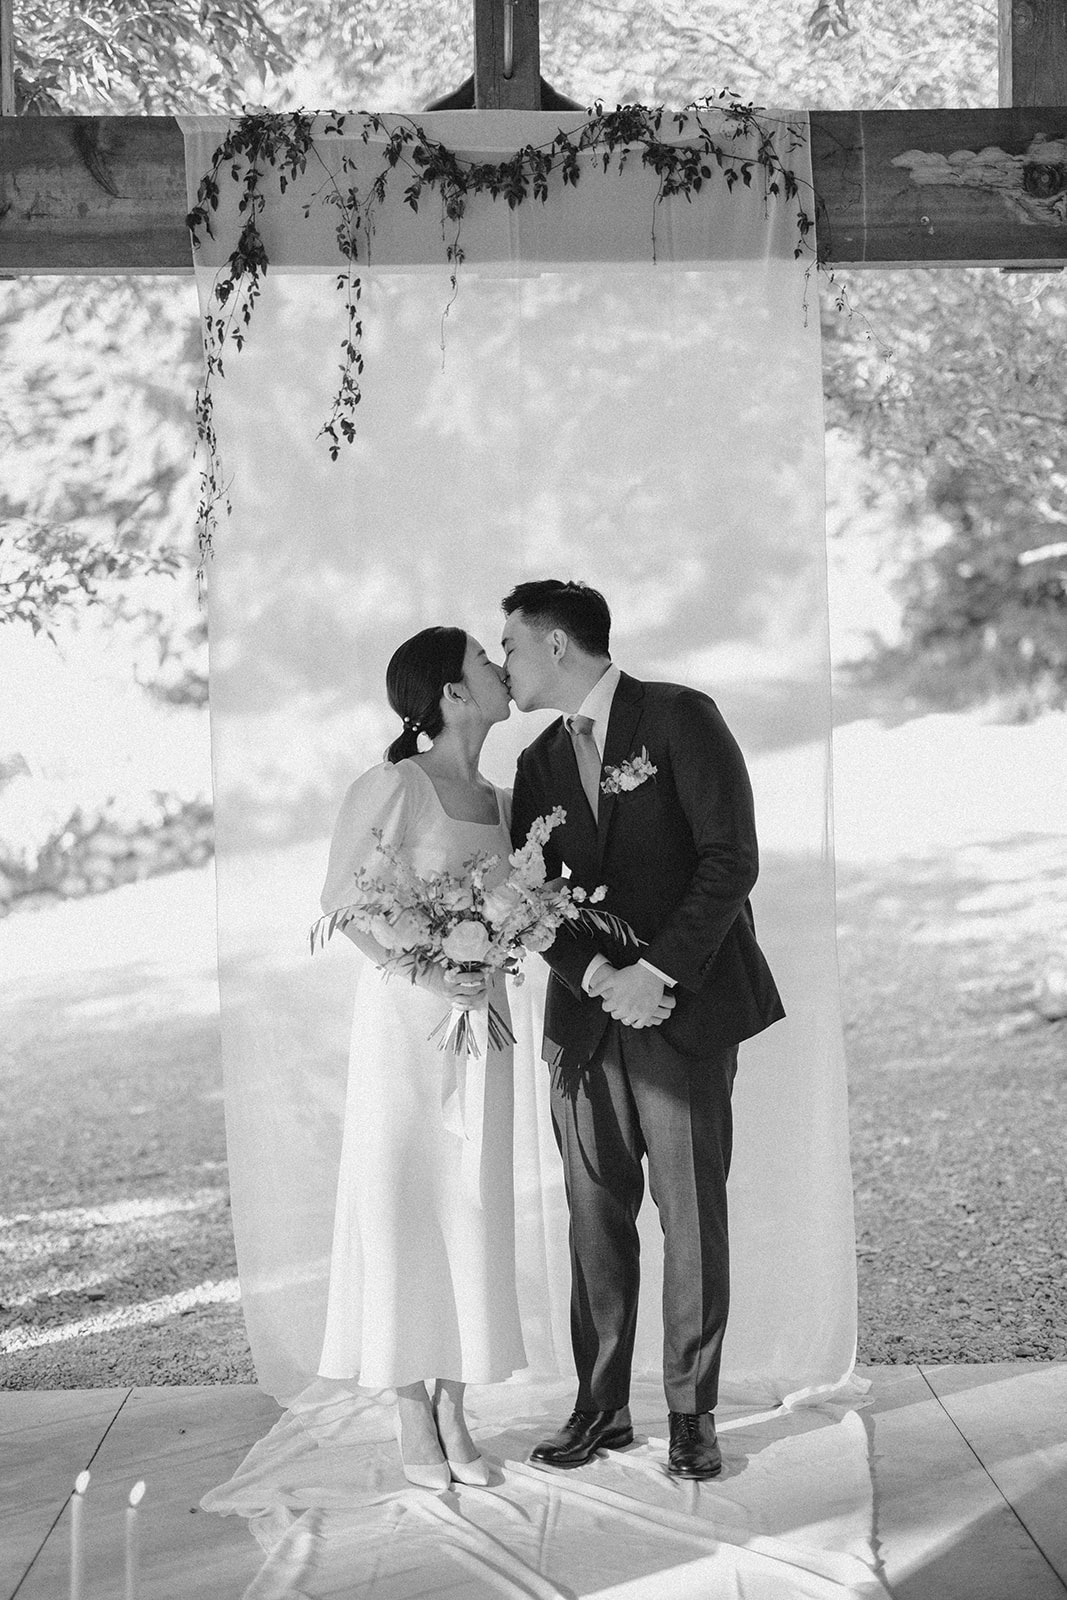 outdoor wedding reception, classic wedding style, chiffon wedding backdrop, black and white wedding photography